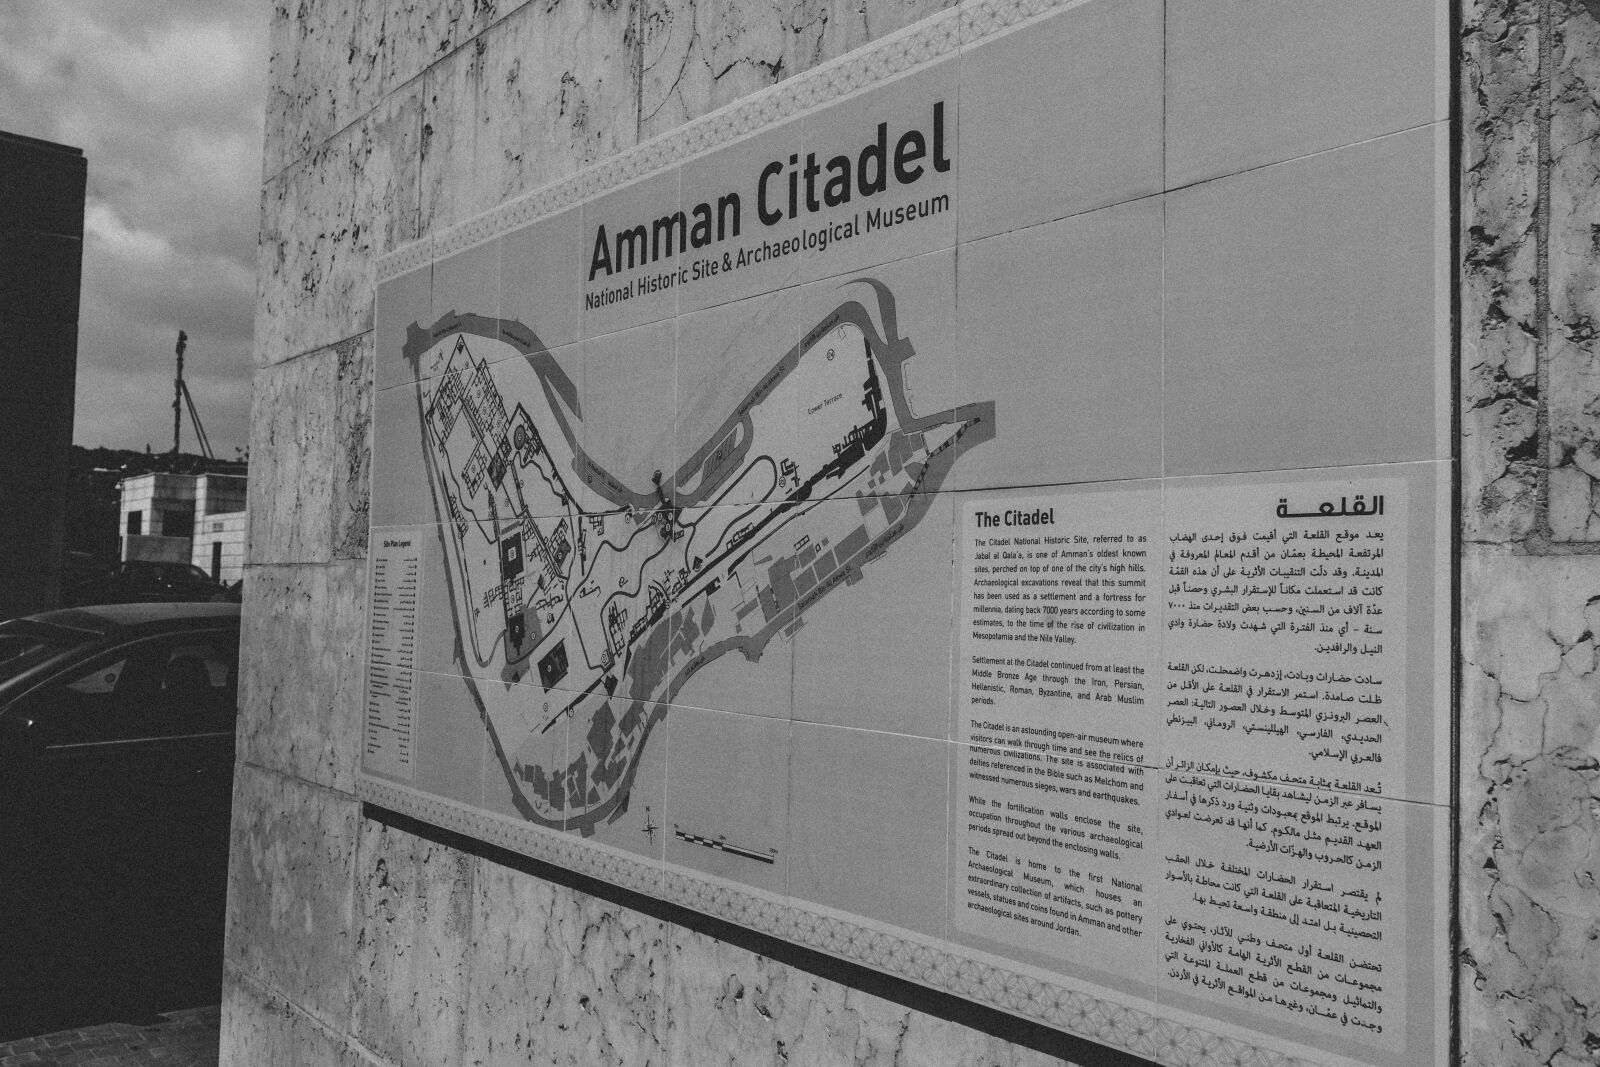 Canon EOS 70D + Sigma 18-35mm F1.8 DC HSM Art sample photo. Amman, citadel, historic, historic photography